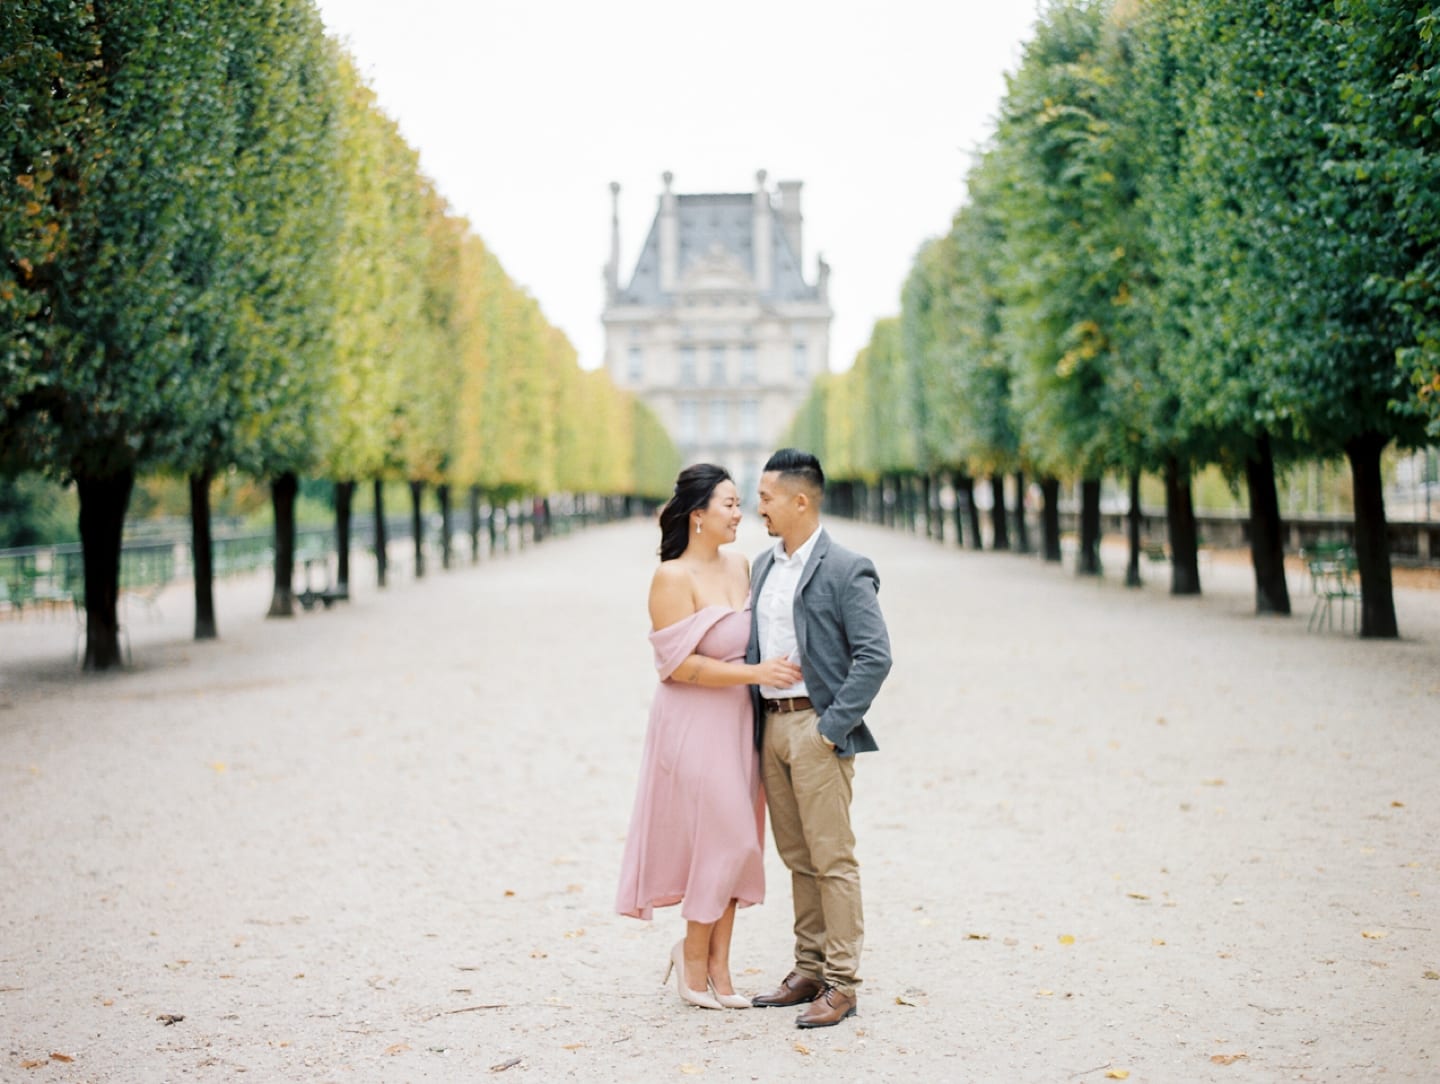 louvre_tuileries_gardens_paris_france_engagement_0012.jpg